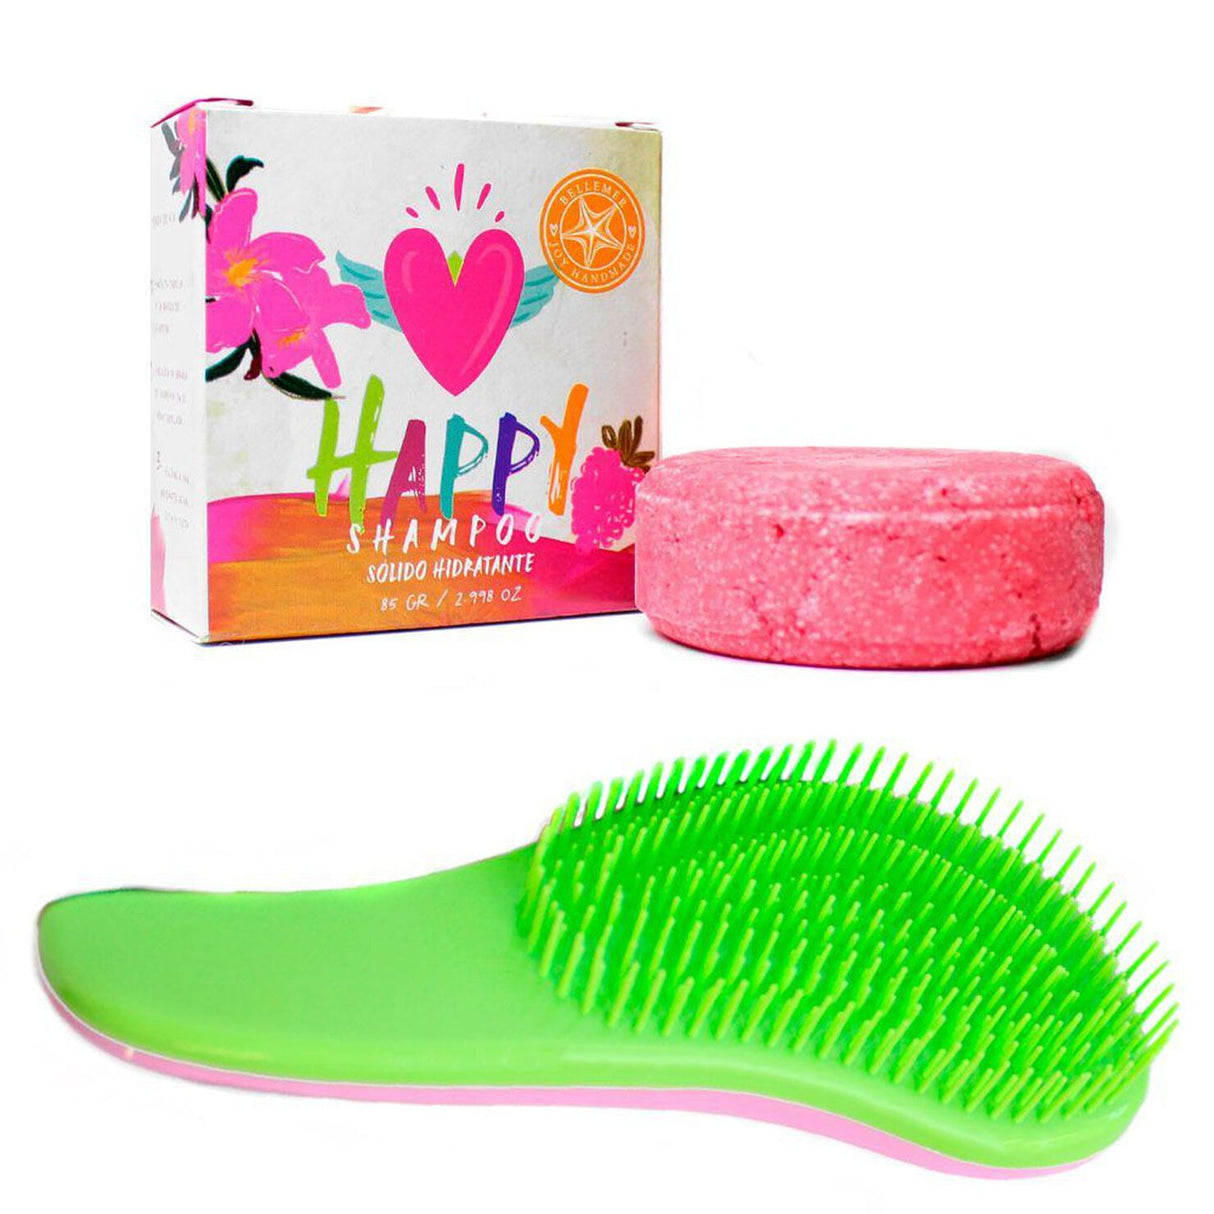 Shampoo en barra natural hidratante + cepillo antifrizz CVL